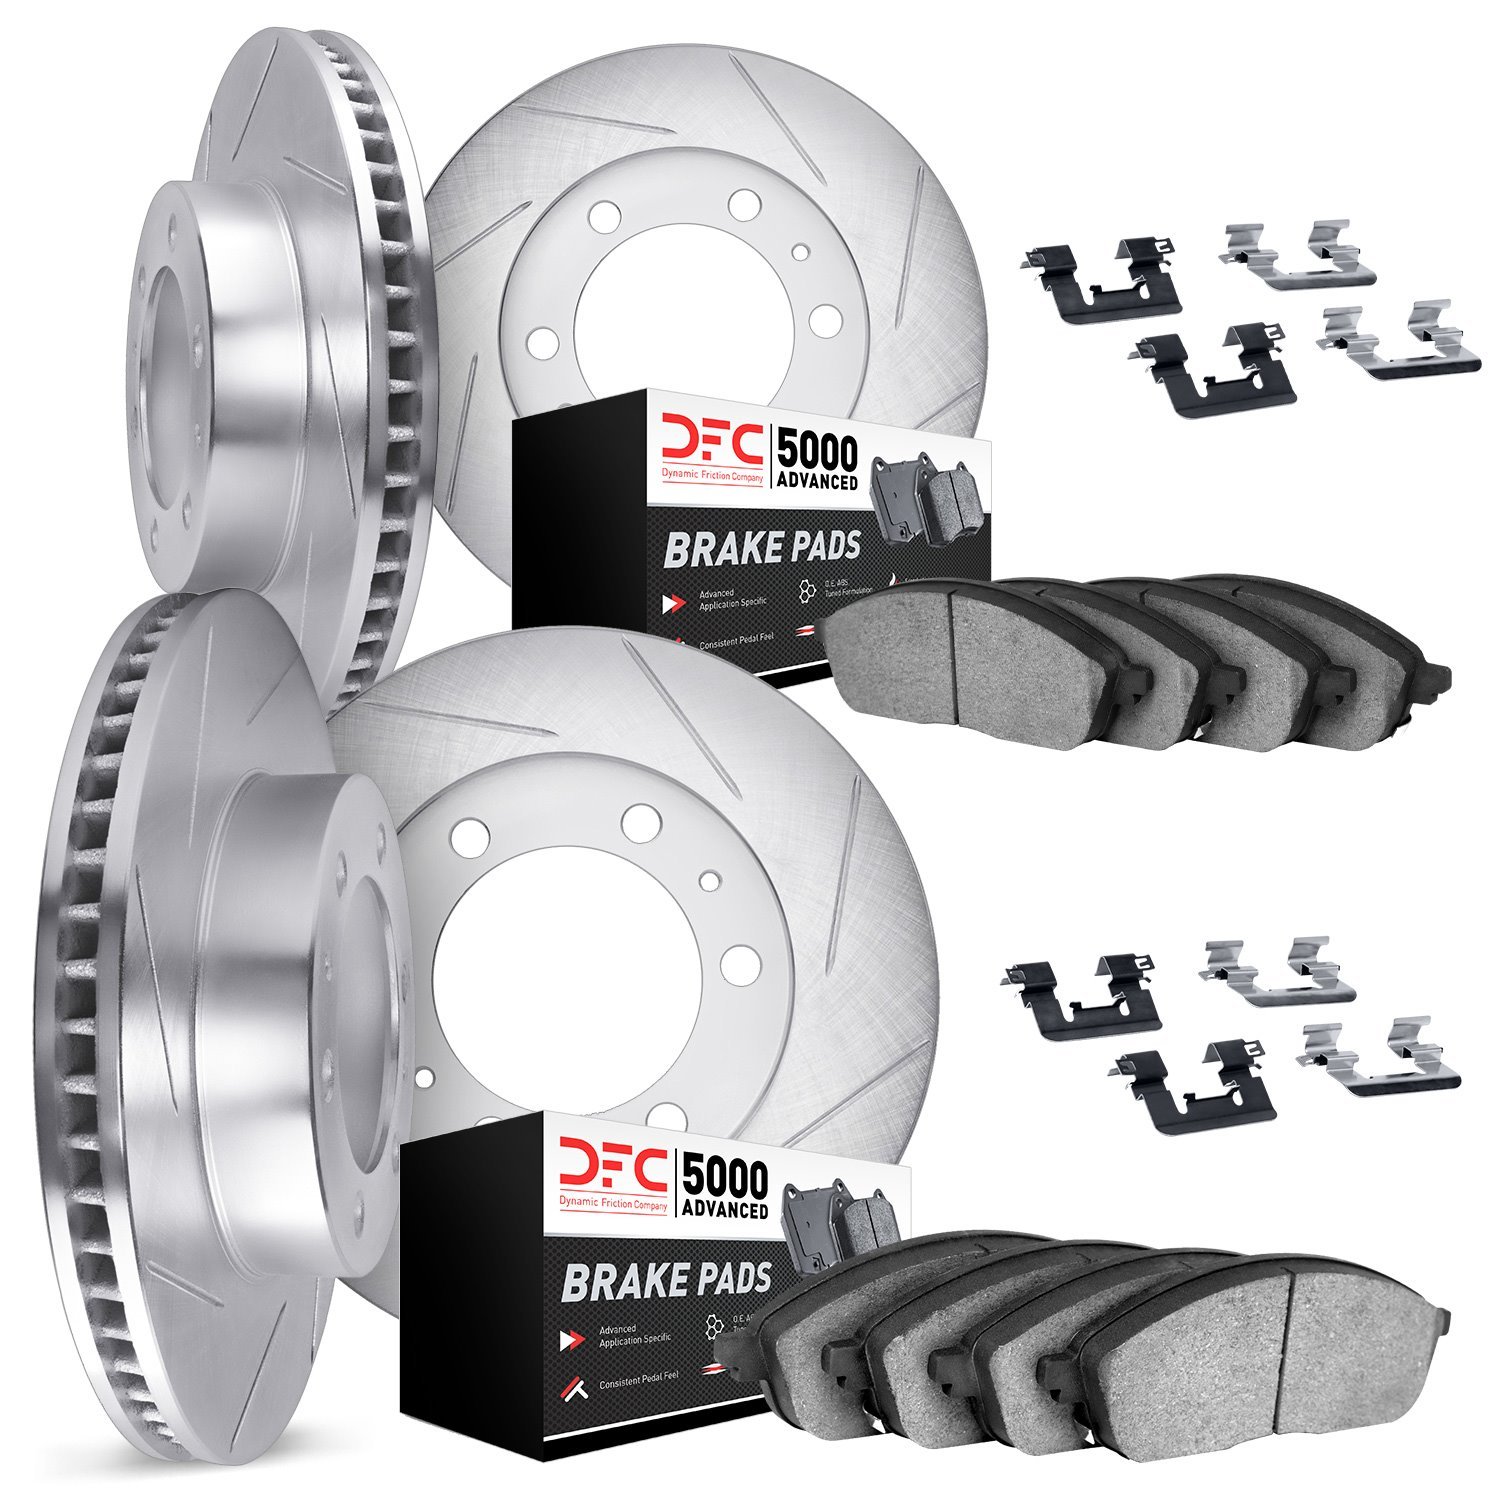 5514-67057 Slotted Brake Rotors w/5000 Advanced Brake Pads Kit & Hardware [Silver], Fits Select Multiple Makes/Models, Position: